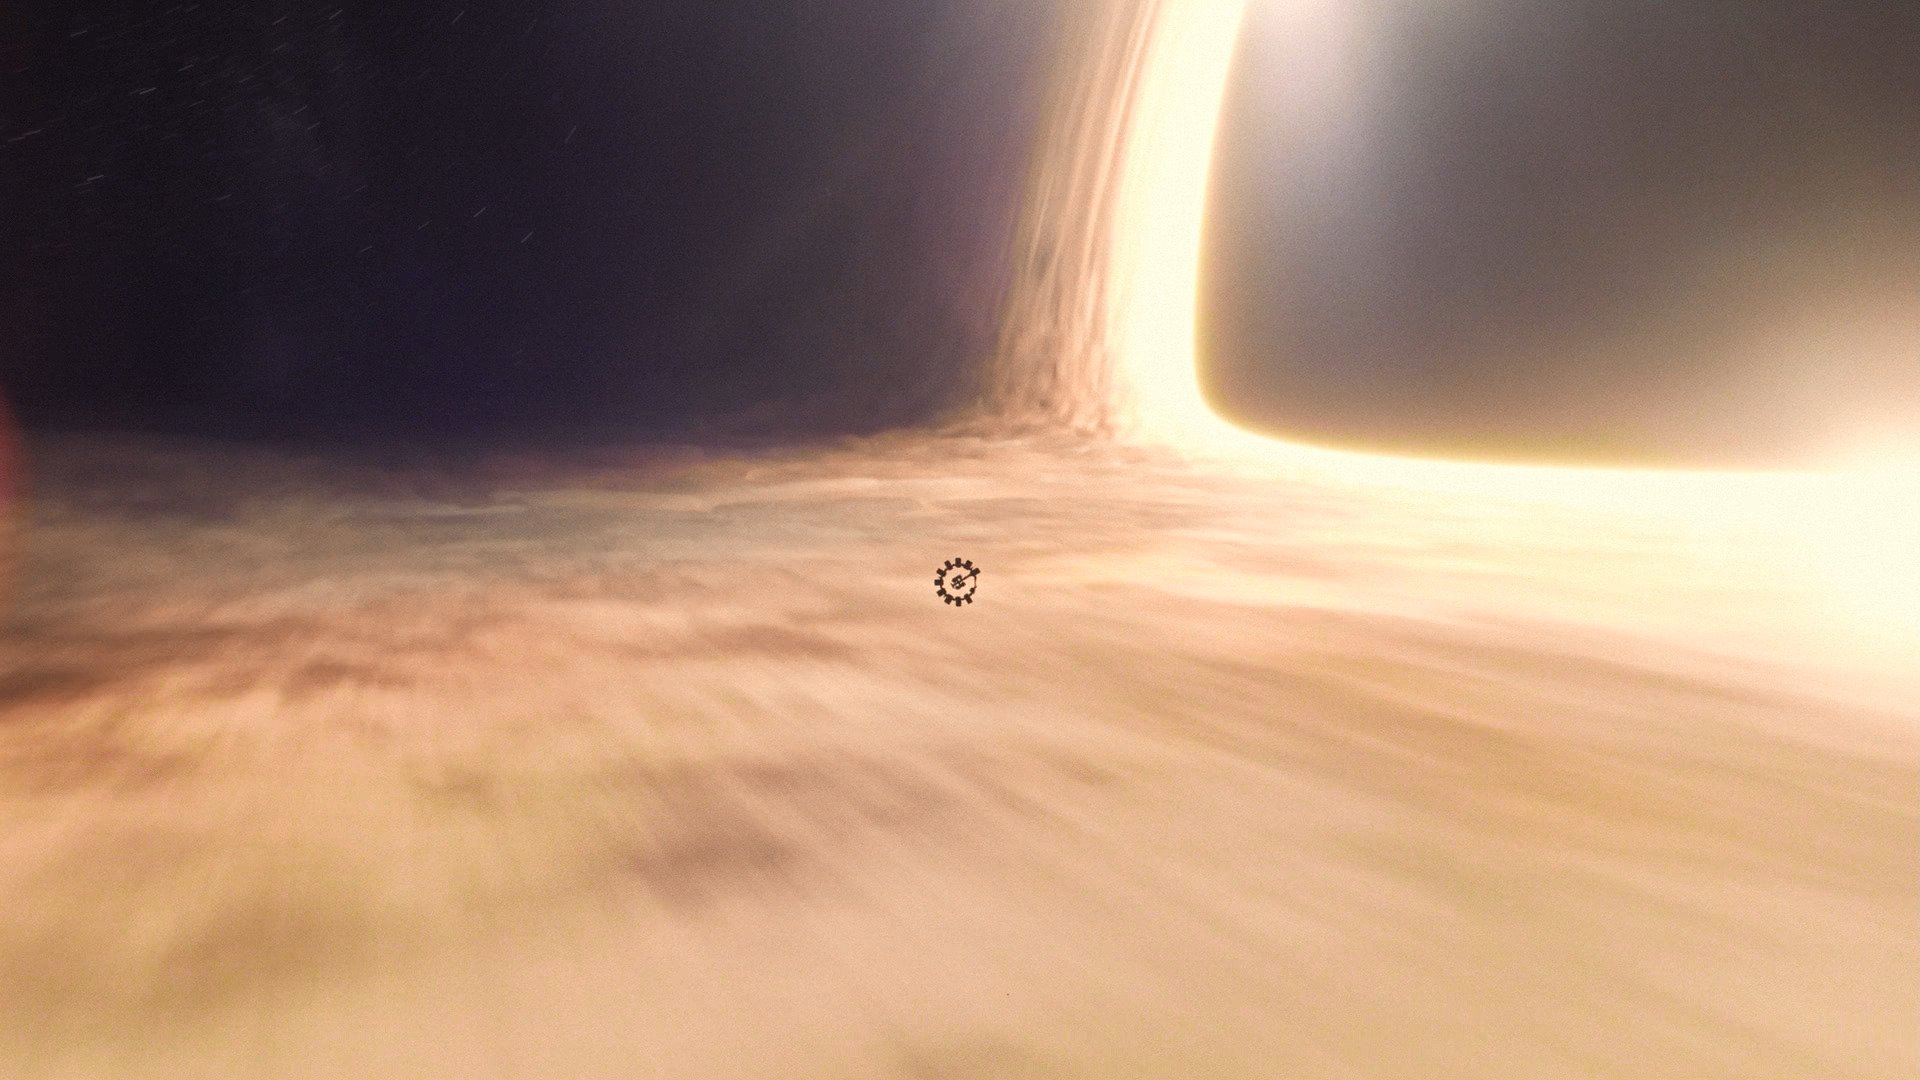 Interstellar (movie), Gargantua, Black Holes Wallpaper HD / Desktop and Mobile Background